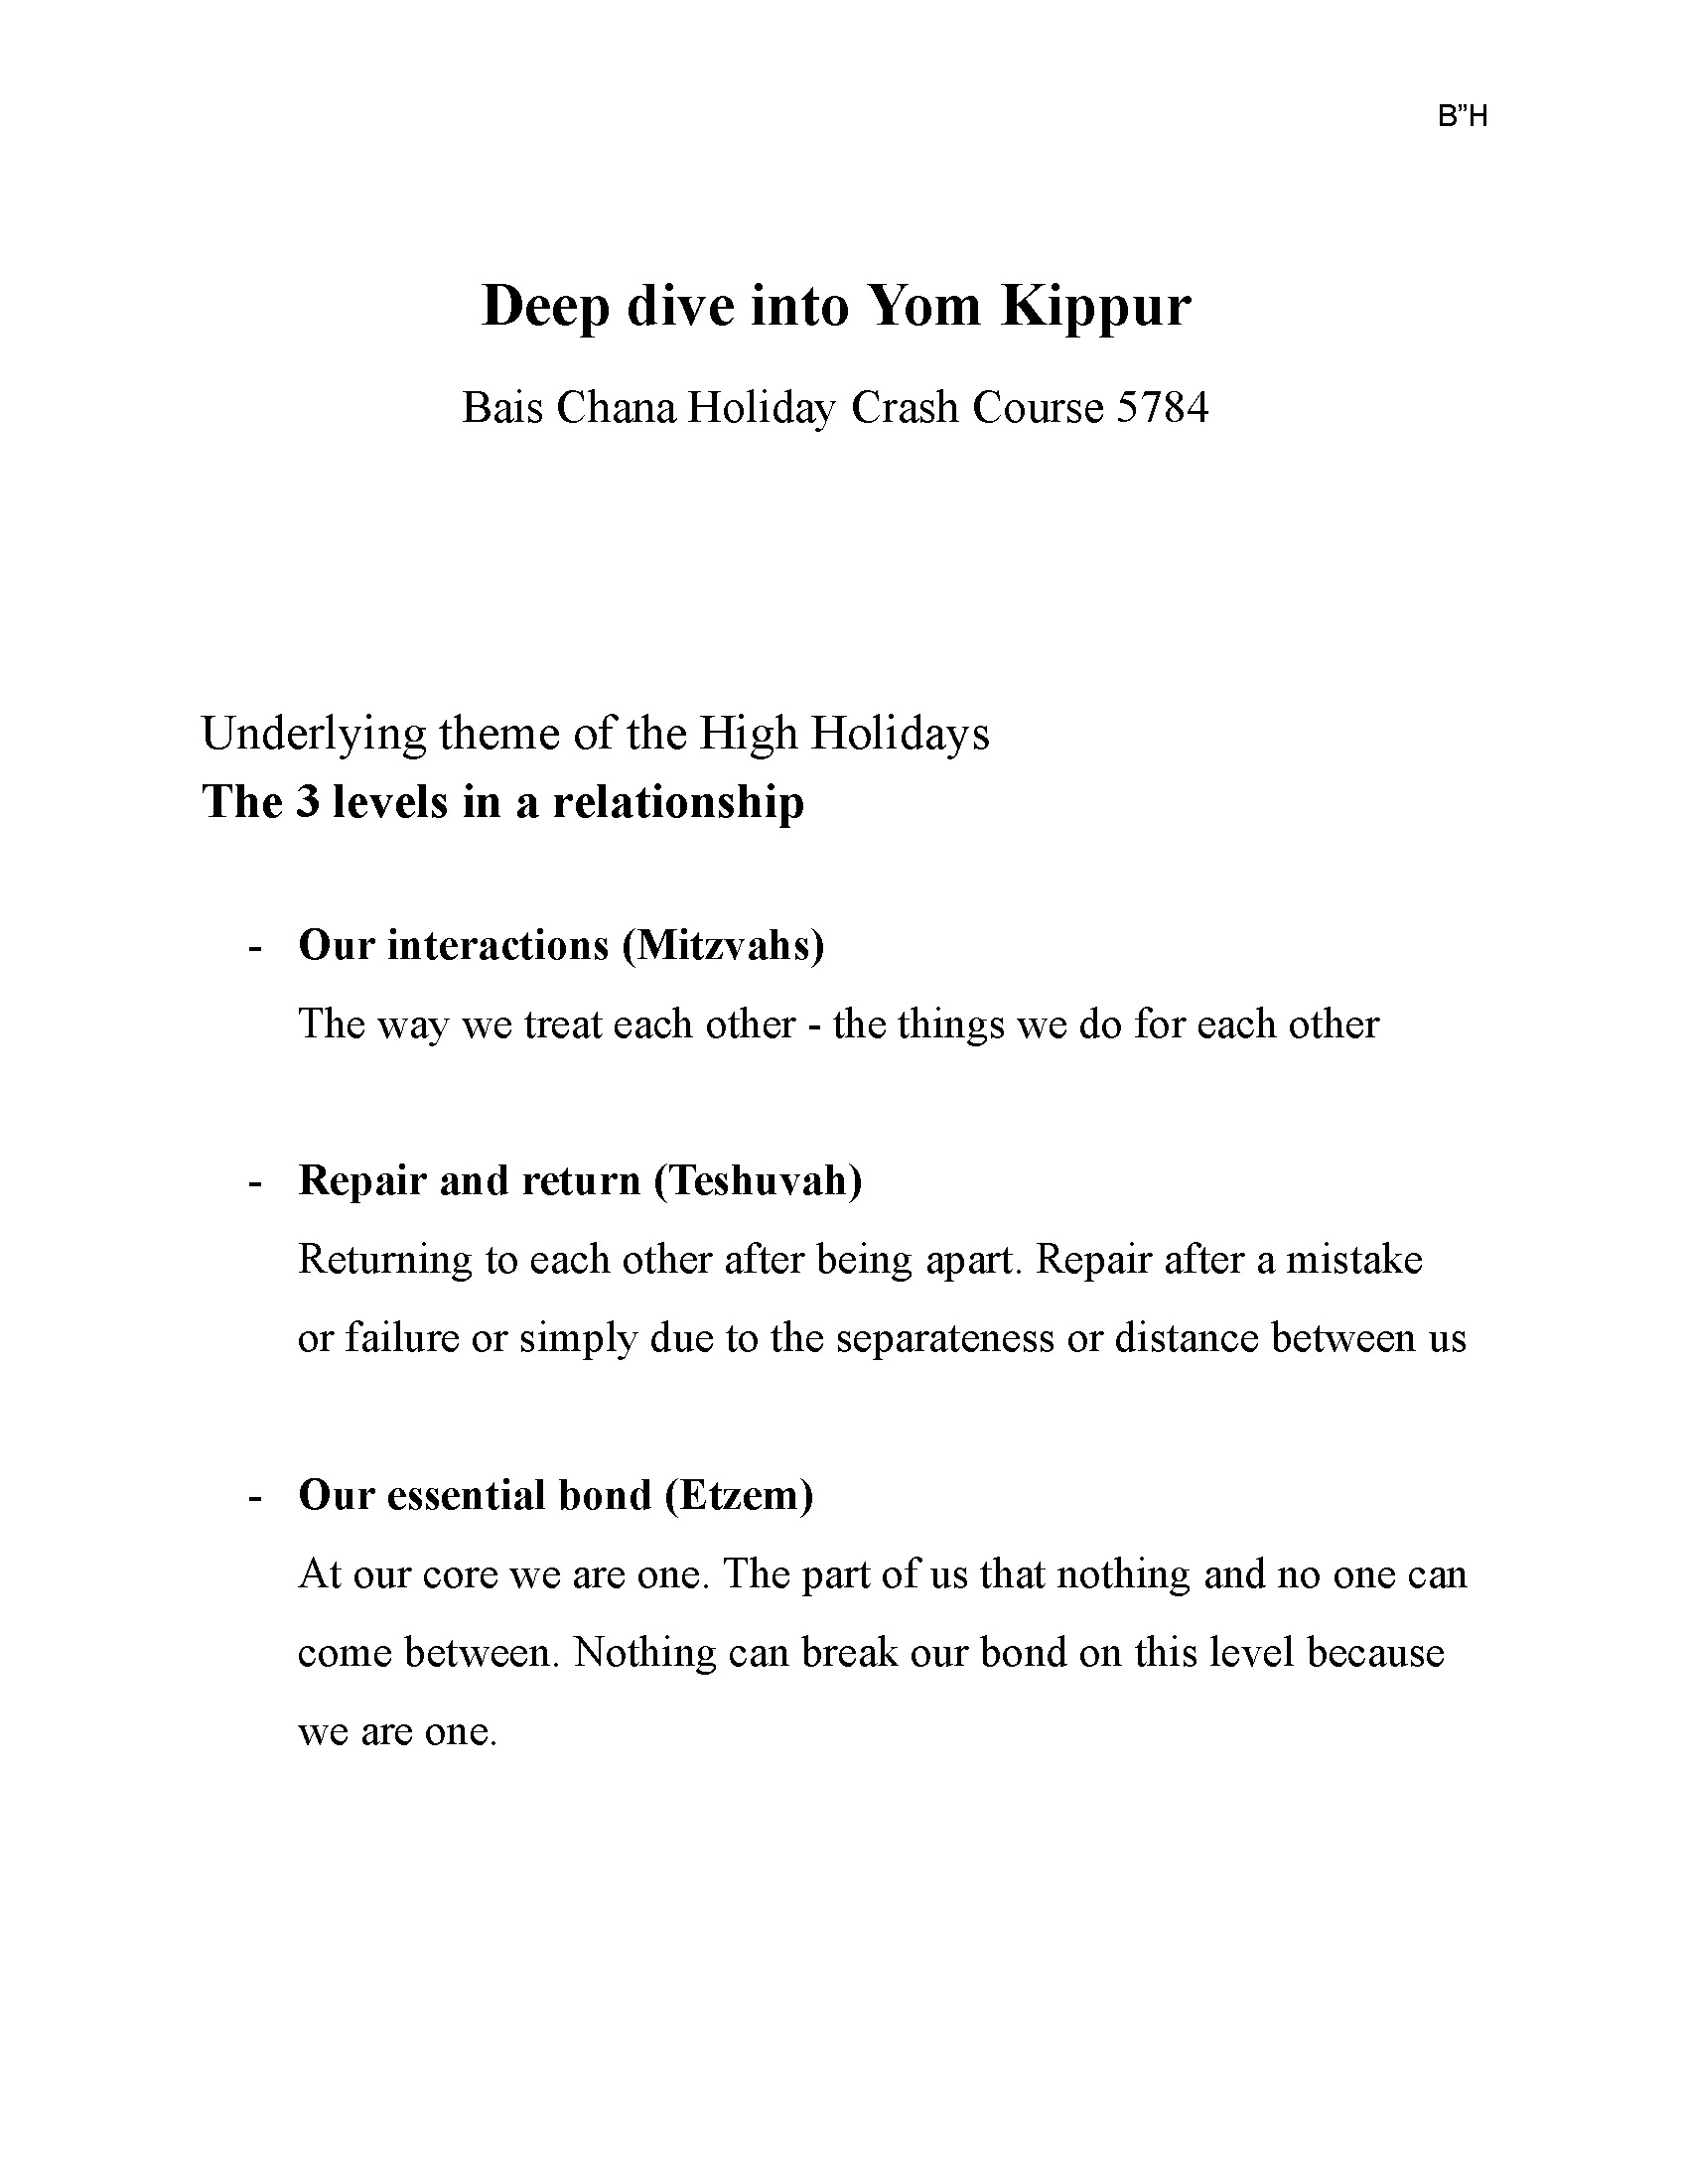 Deep Dive - Yom Kippur 5784_Page_1